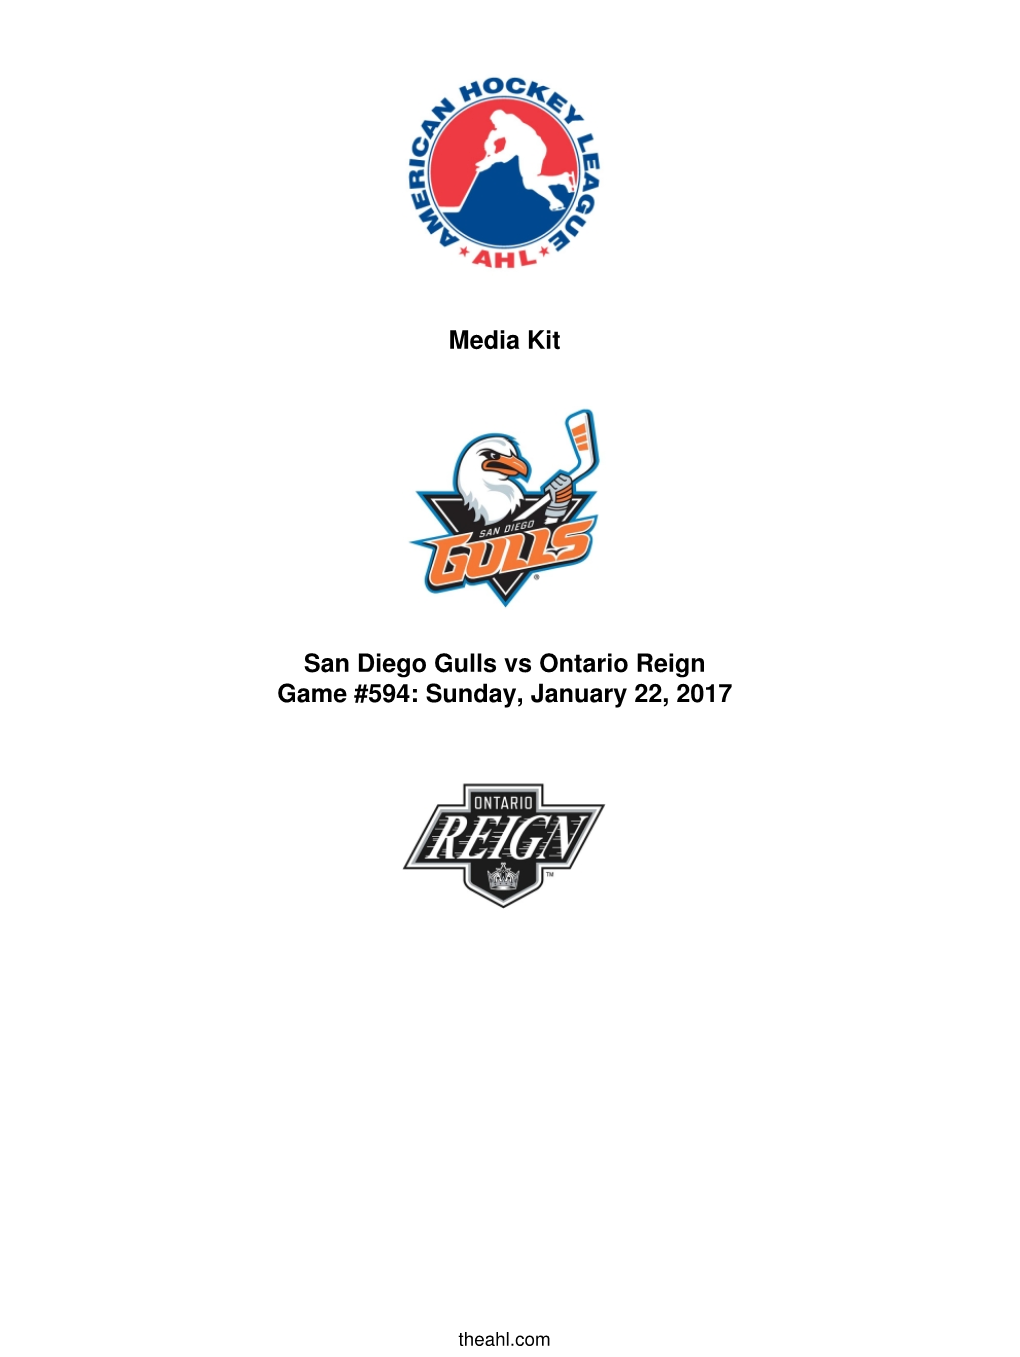 Media Kit San Diego Gulls Vs Ontario Reign Game #594: Sunday